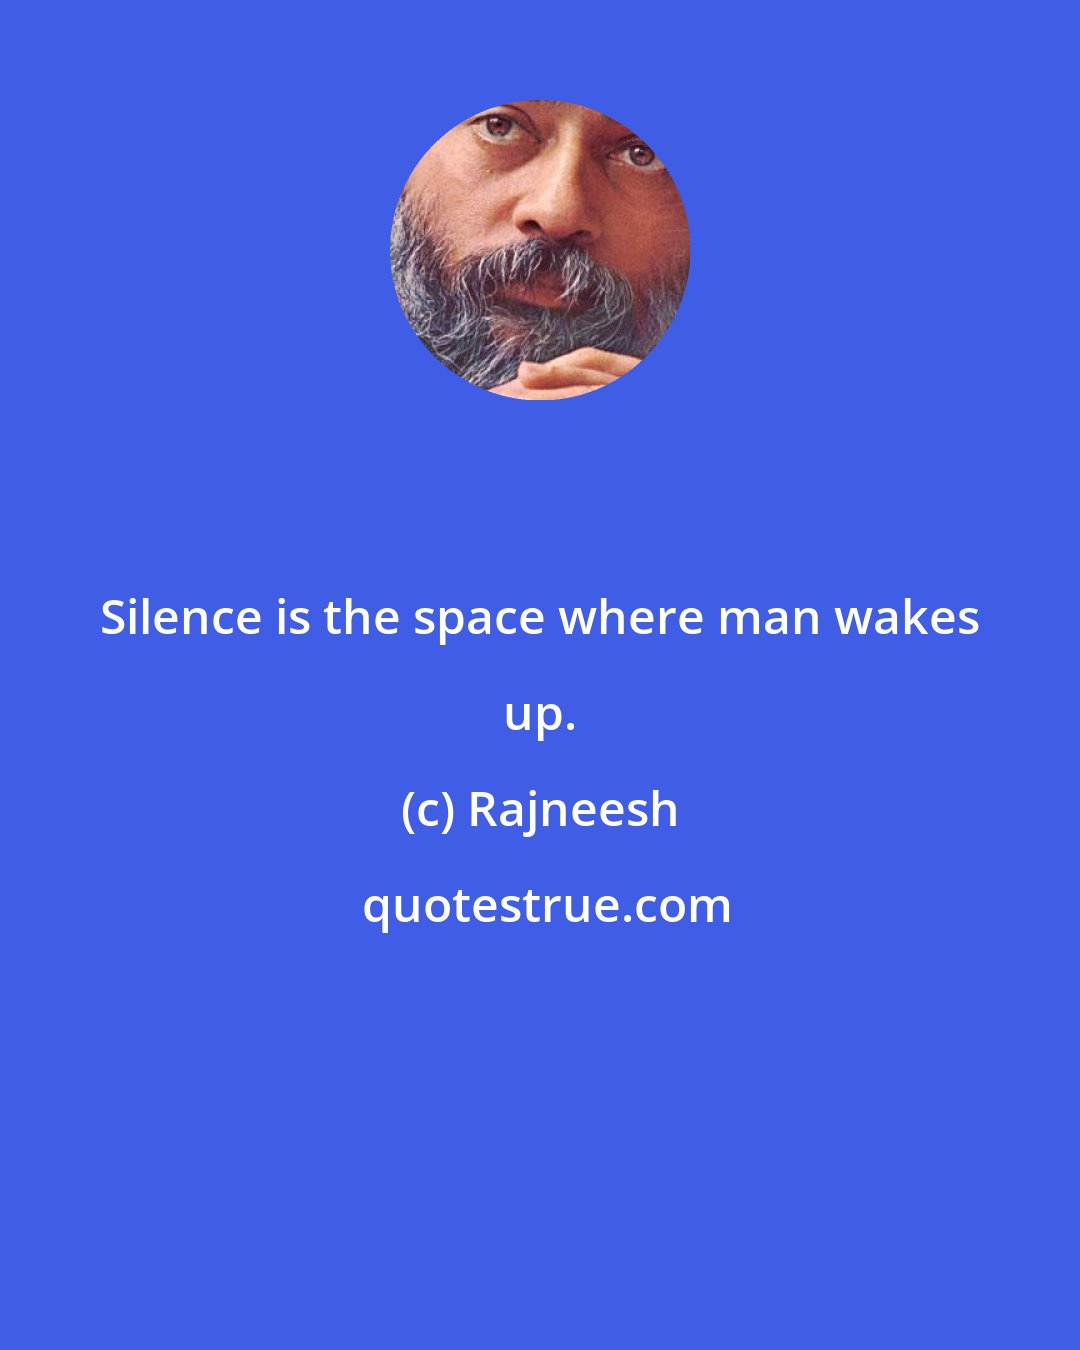 Rajneesh: Silence is the space where man wakes up.